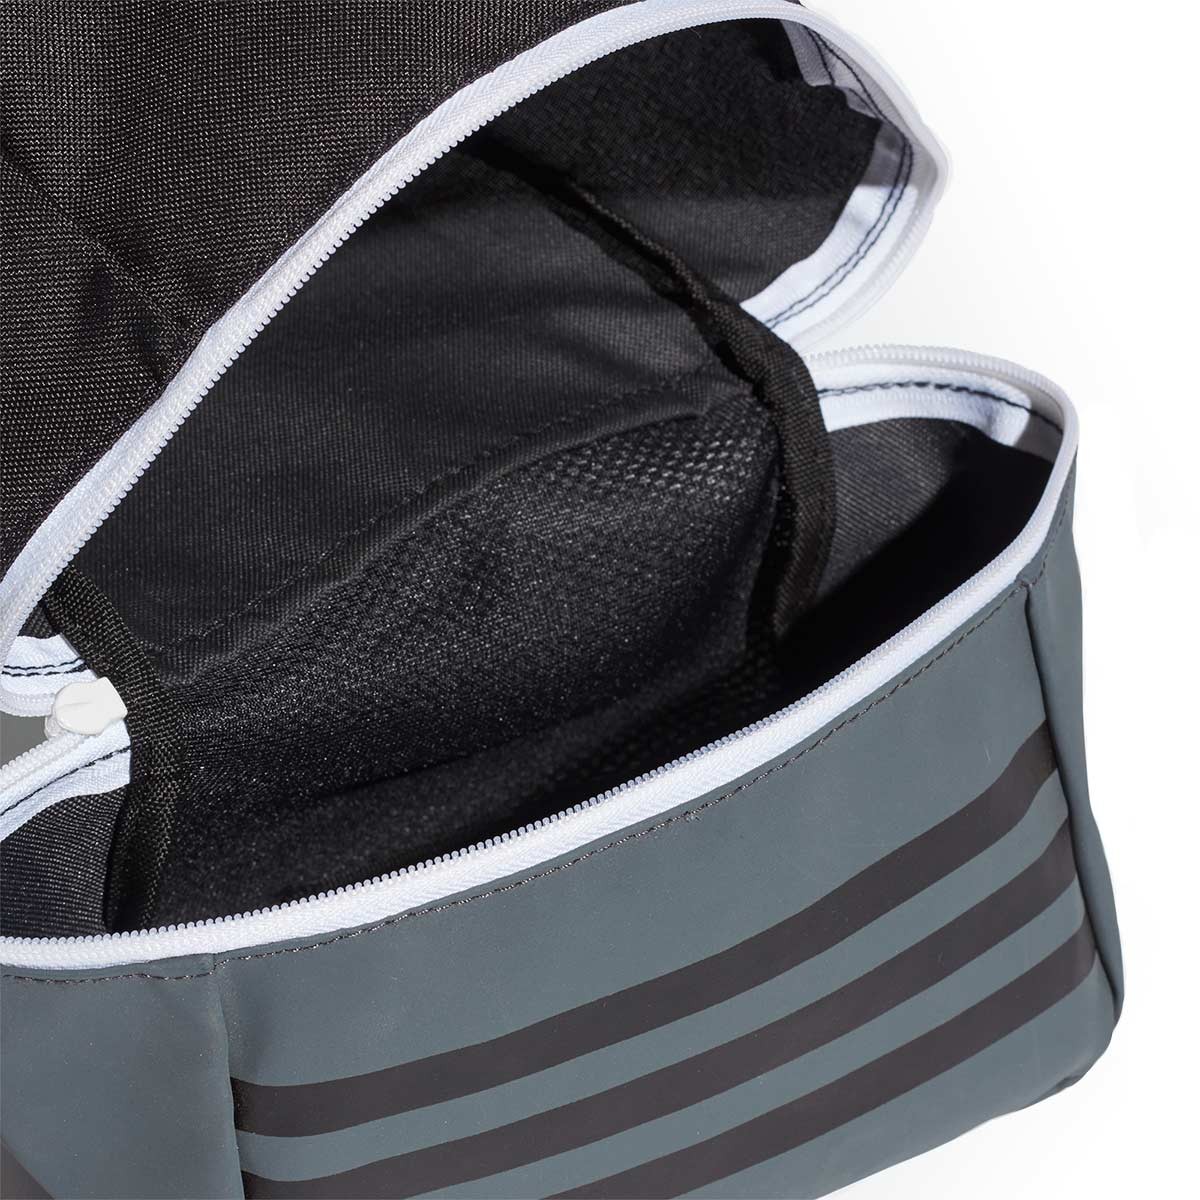 Boot bag adidas Tiro SB Black-White - Football store Fútbol Emotion